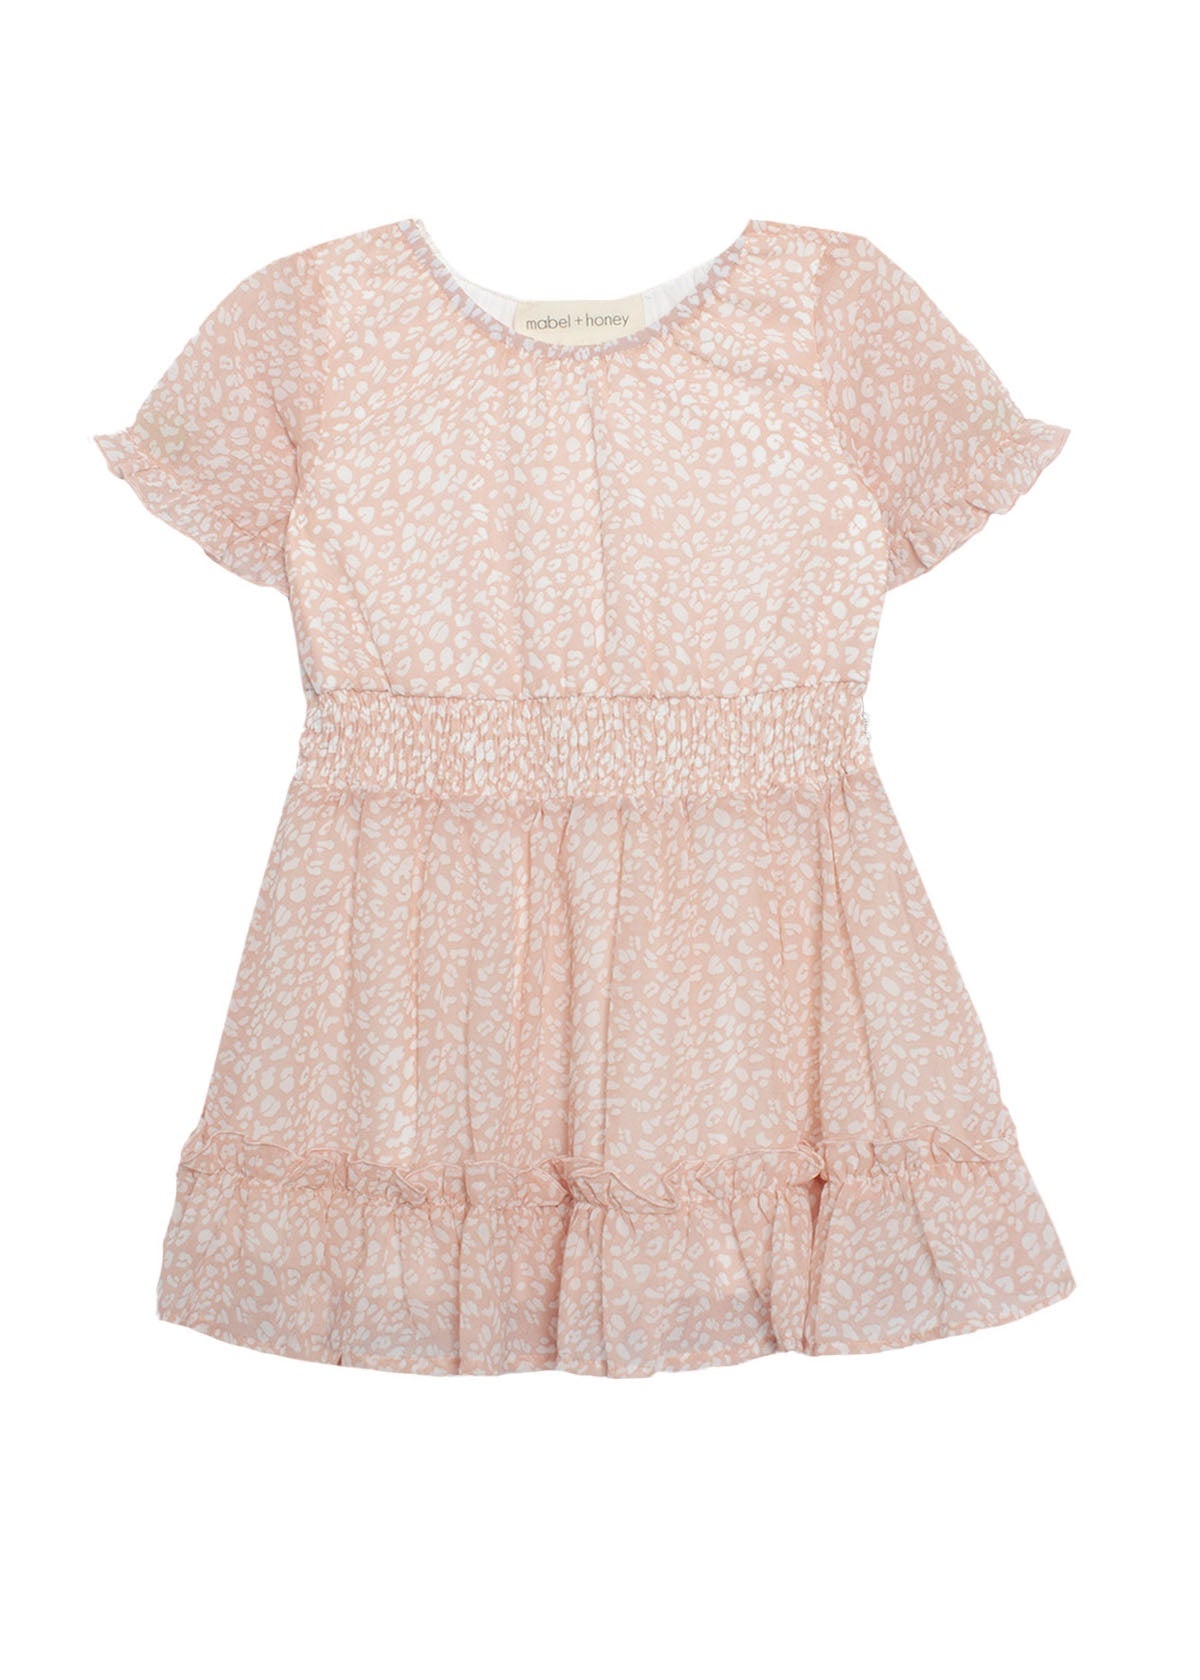 Mabel & Honey Wildflower Dress Pink 6617ME 5101